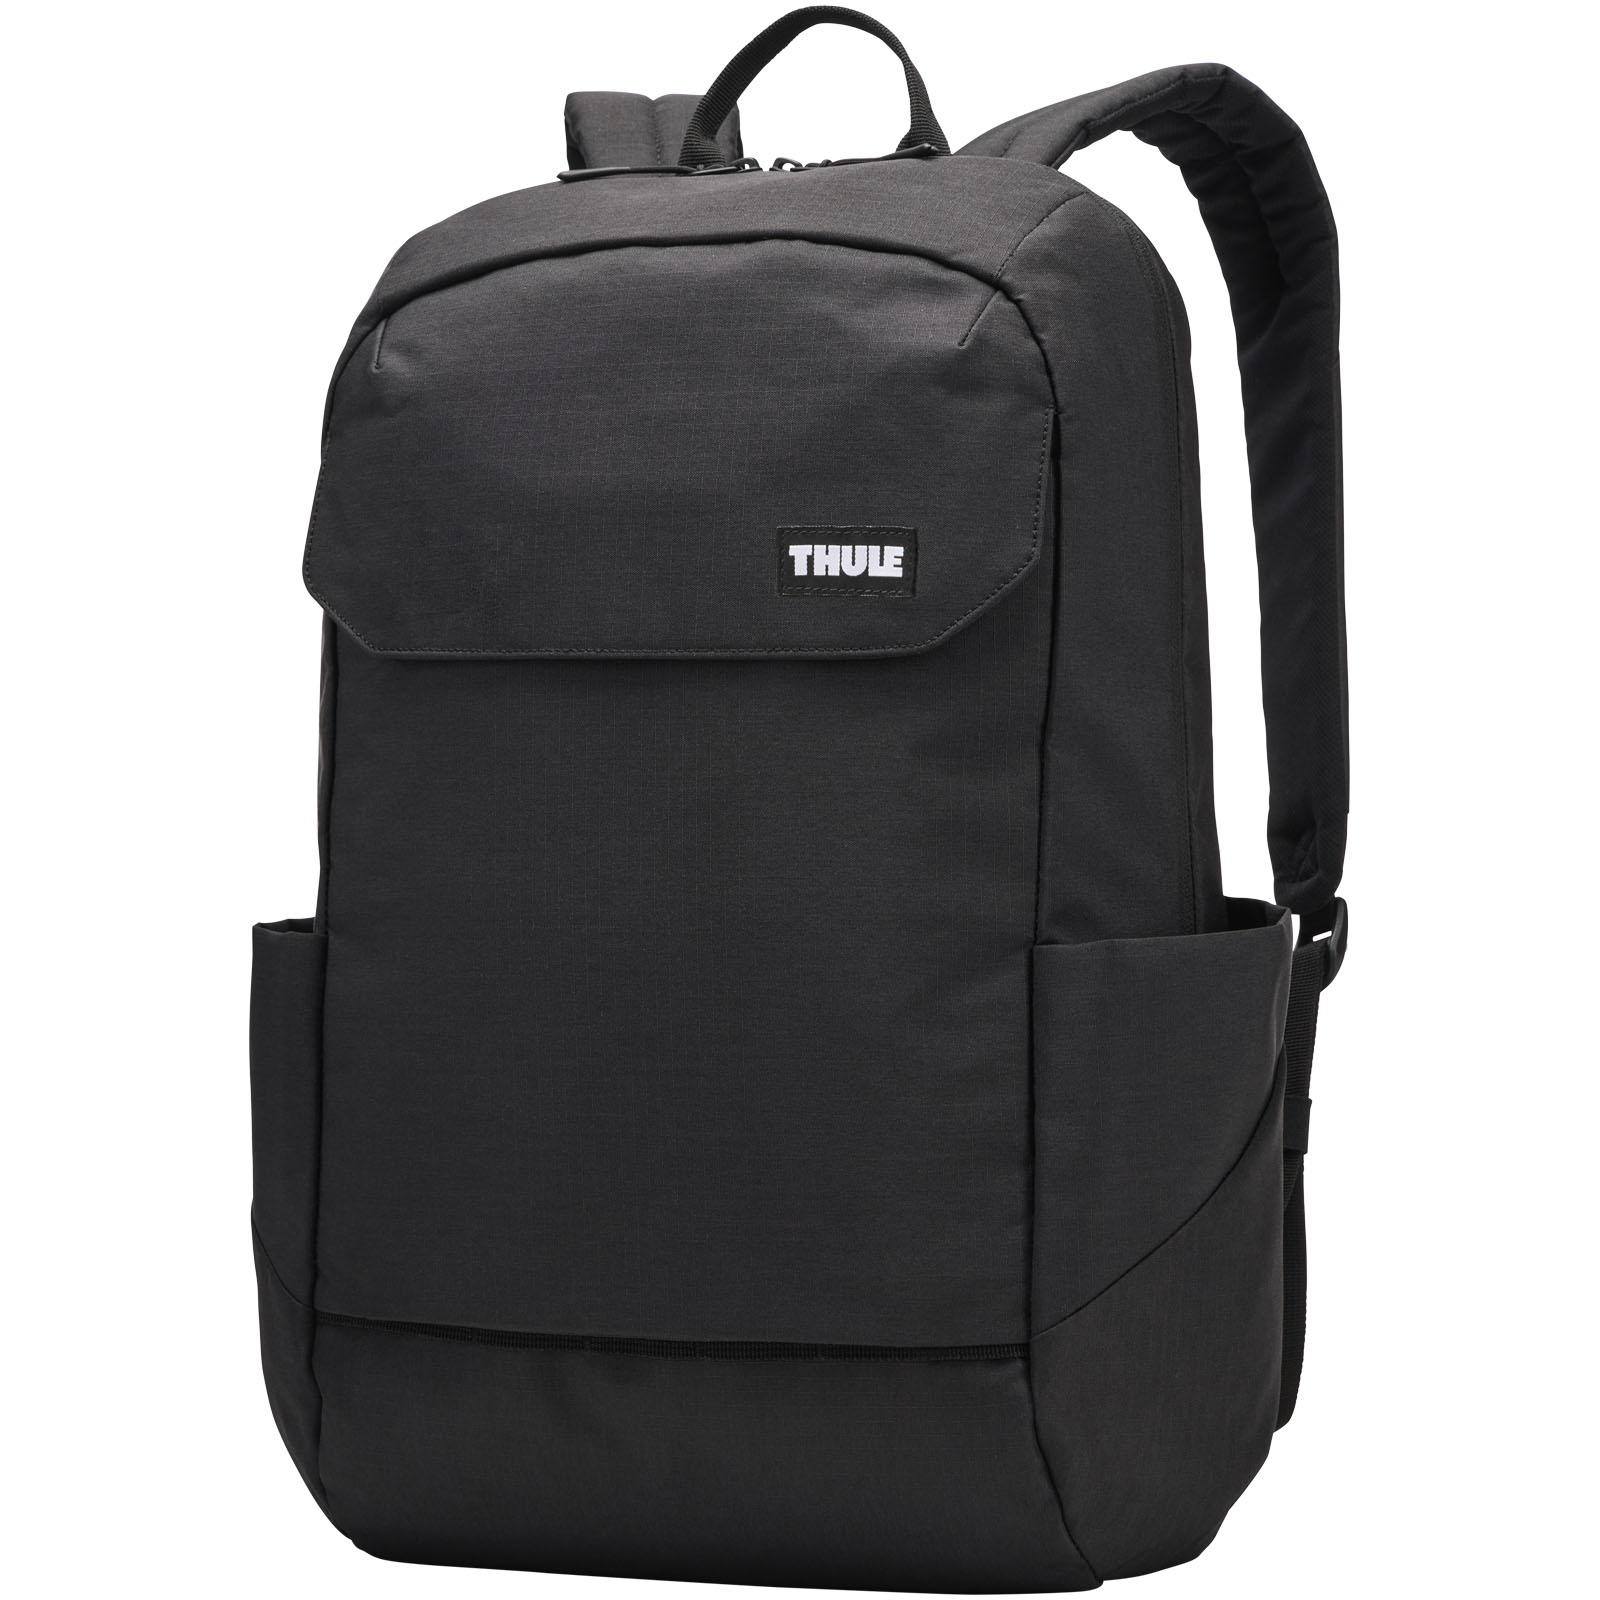 Branded travel backpack Thule LITHOS 20 - solid black